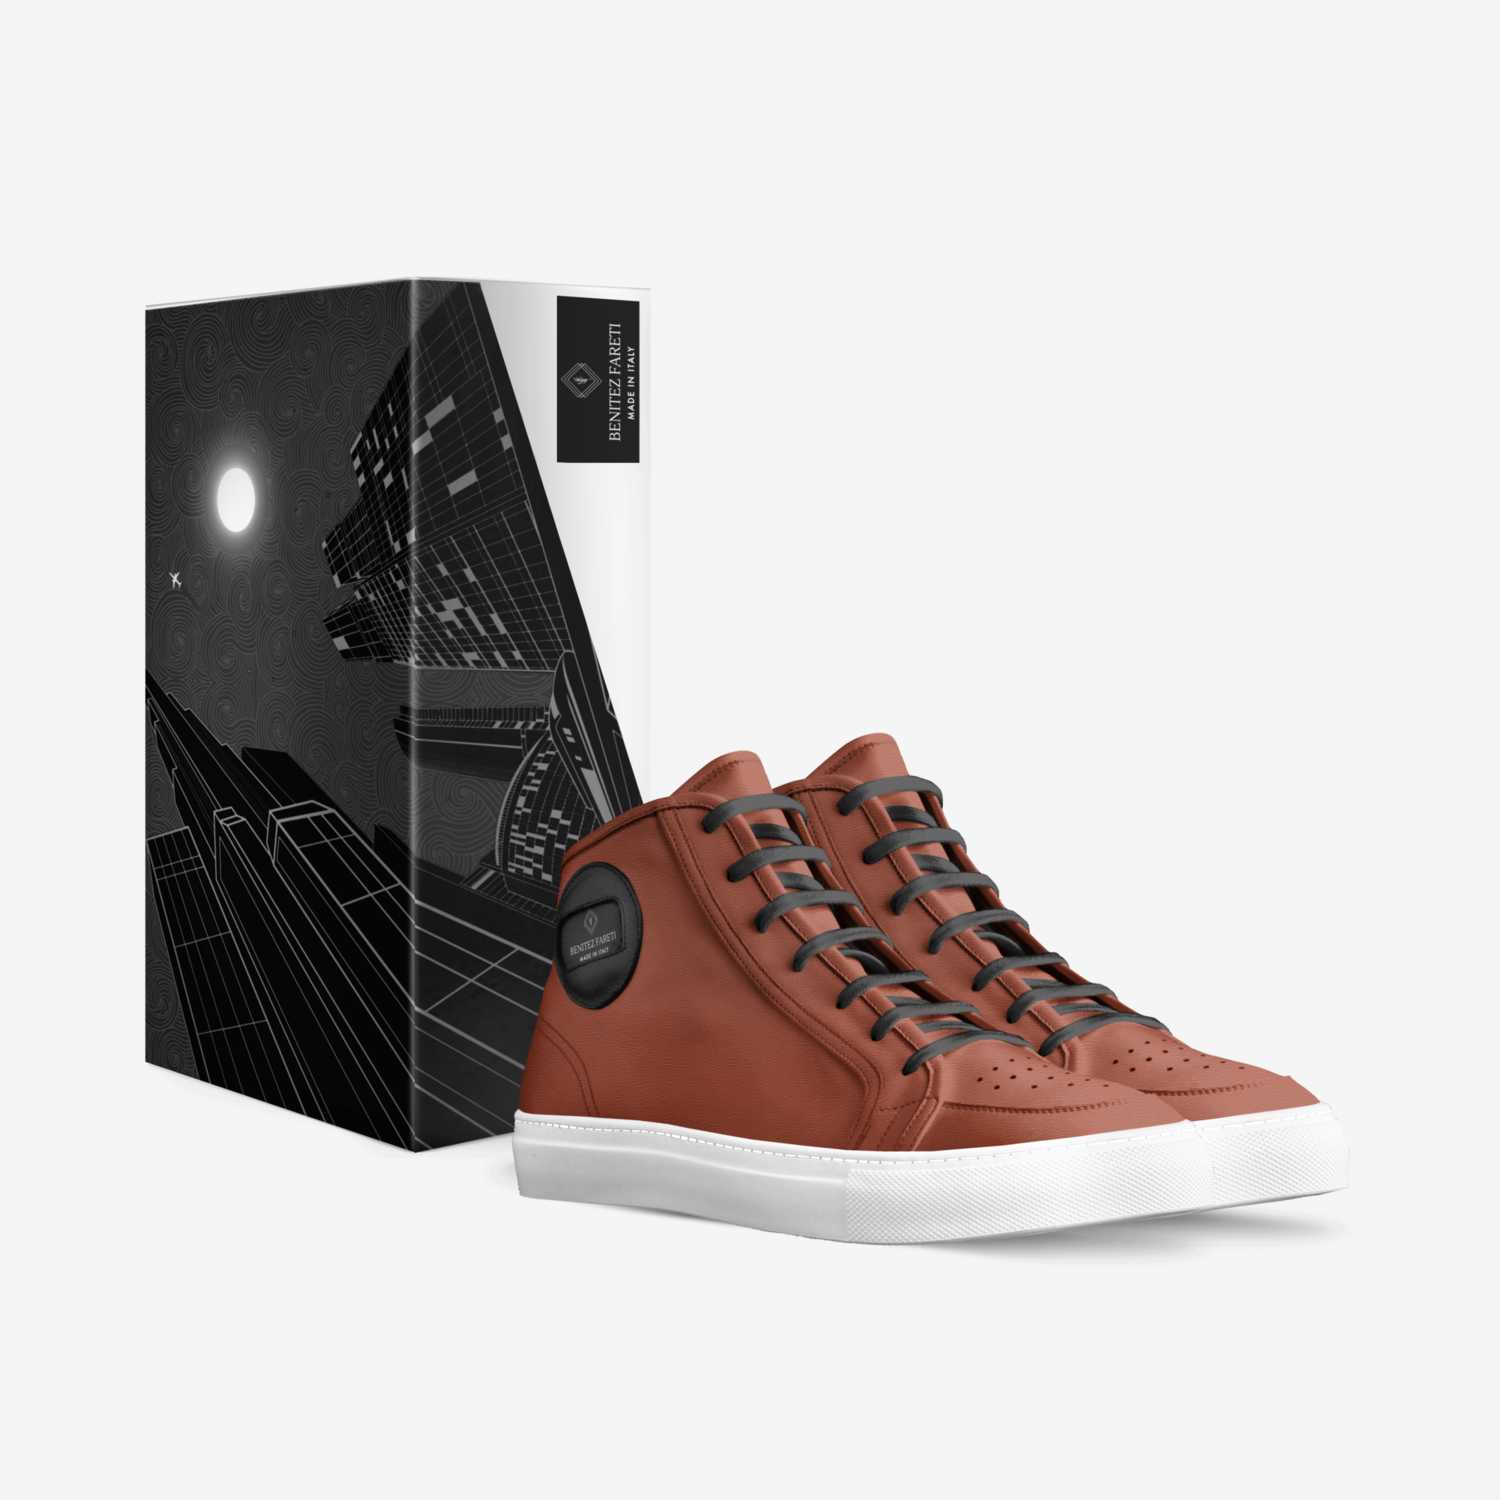 Benitez Fareti custom made in Italy shoes by David Fareti | Box view